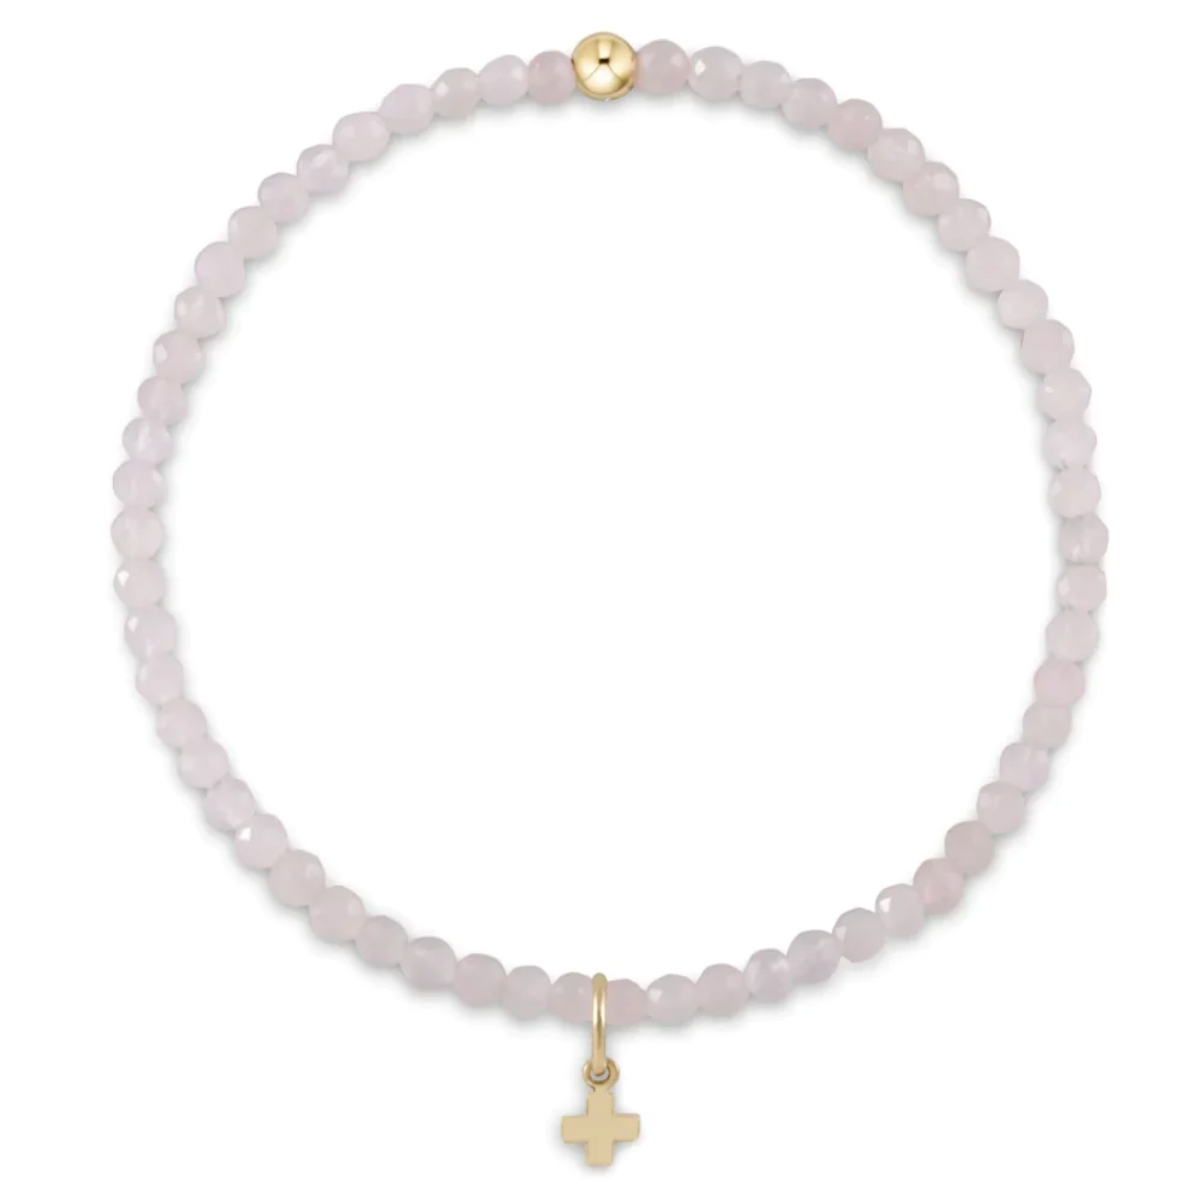 Egirl Gemstone 3mm Bead Bracelet Rose Quartz Signature Cross Small Gold Charm